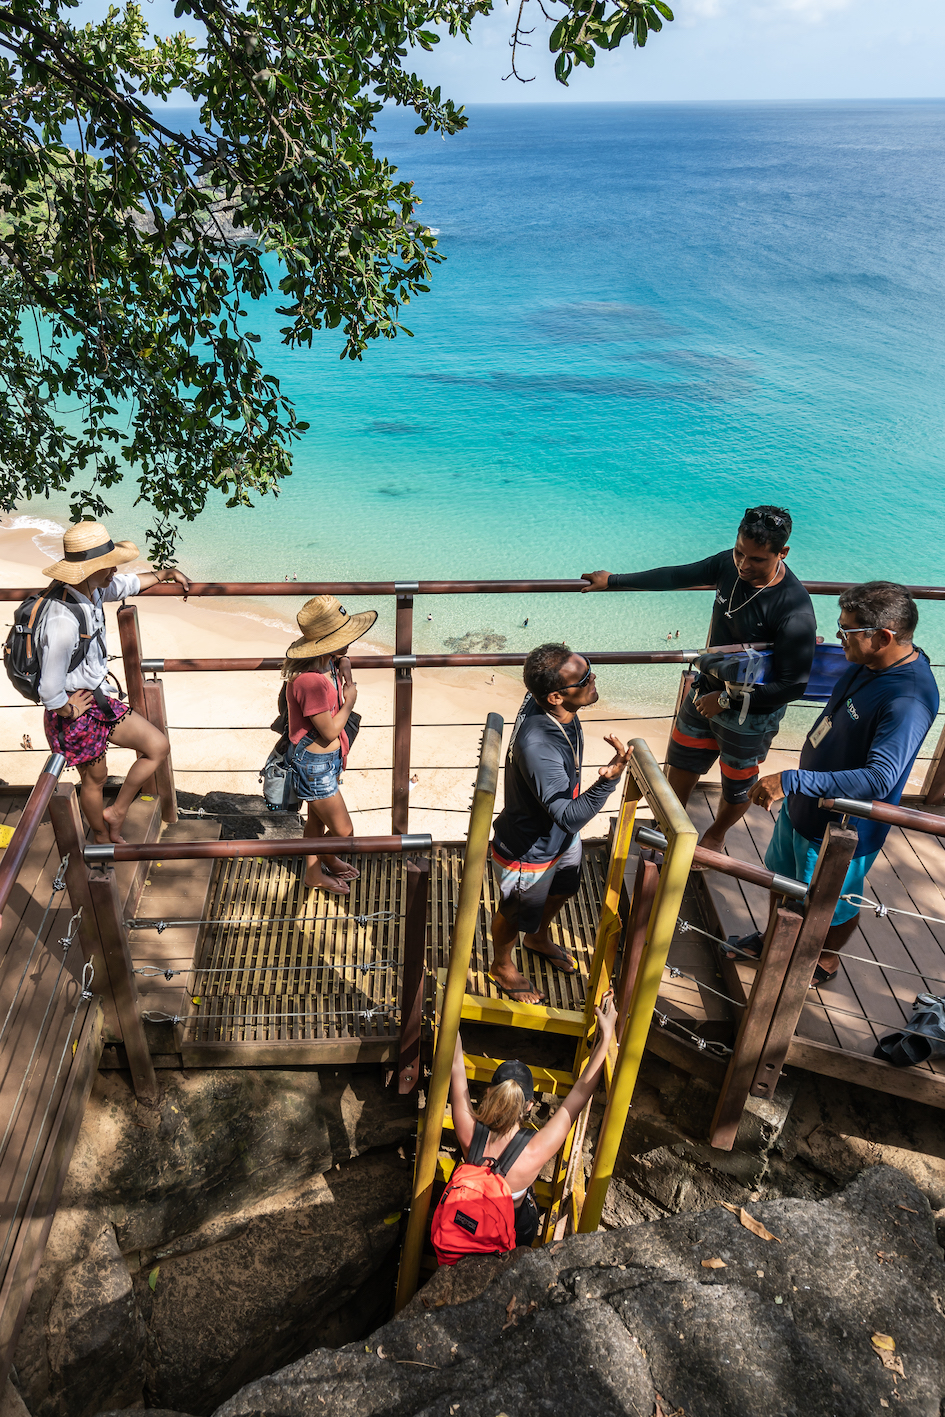 Fernando de Noronha, Pernambuco, Brazil, July 2019 - Stairs to the Beautiful Sancho Beach, with turquoise clear water, at Fernando de Noronha Marine National Park.